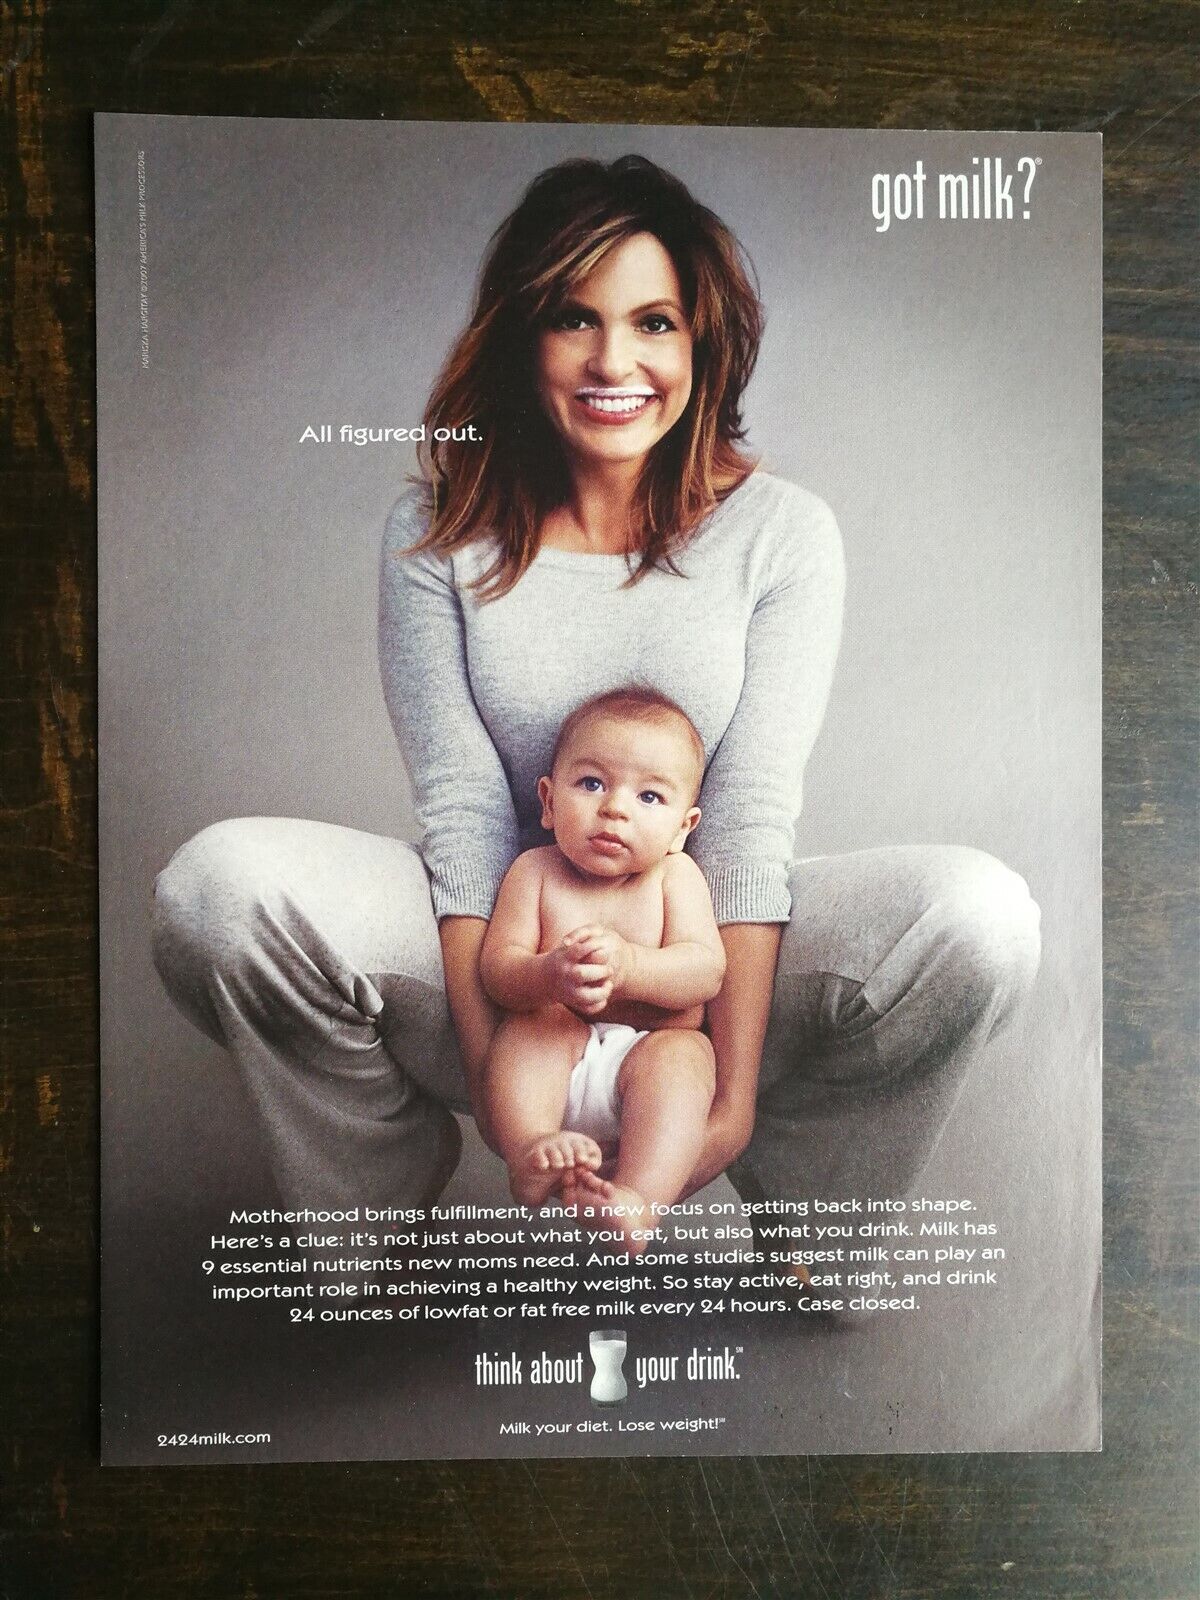  2007 Mariska Hargitay with Baby Got Milk? - Full Page Original Color Ad